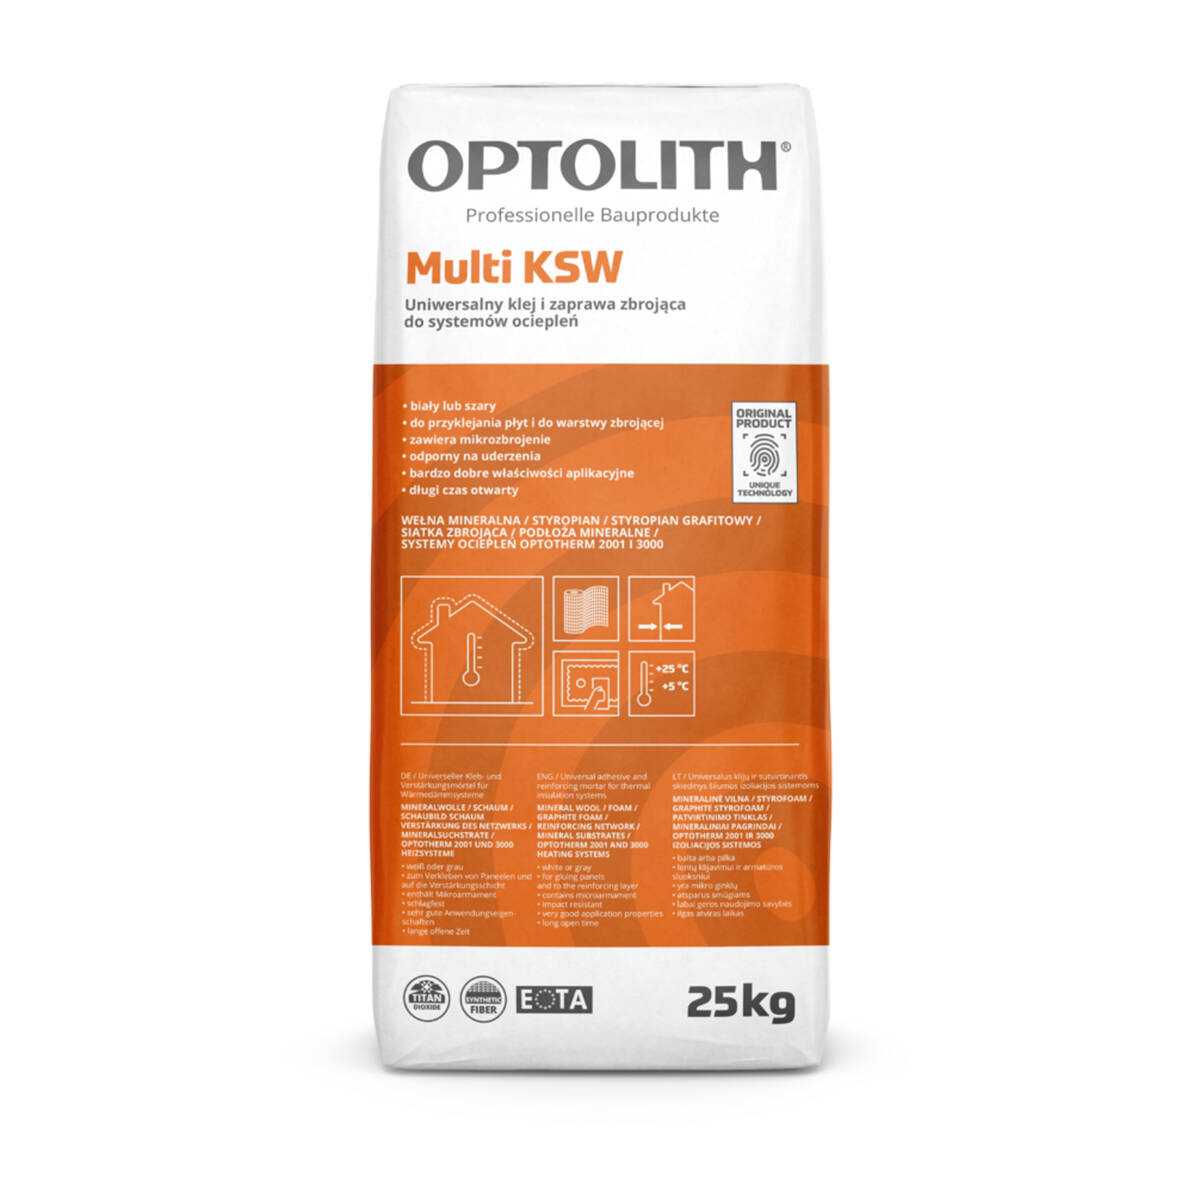 Optotherm Mulit KSW Optolith